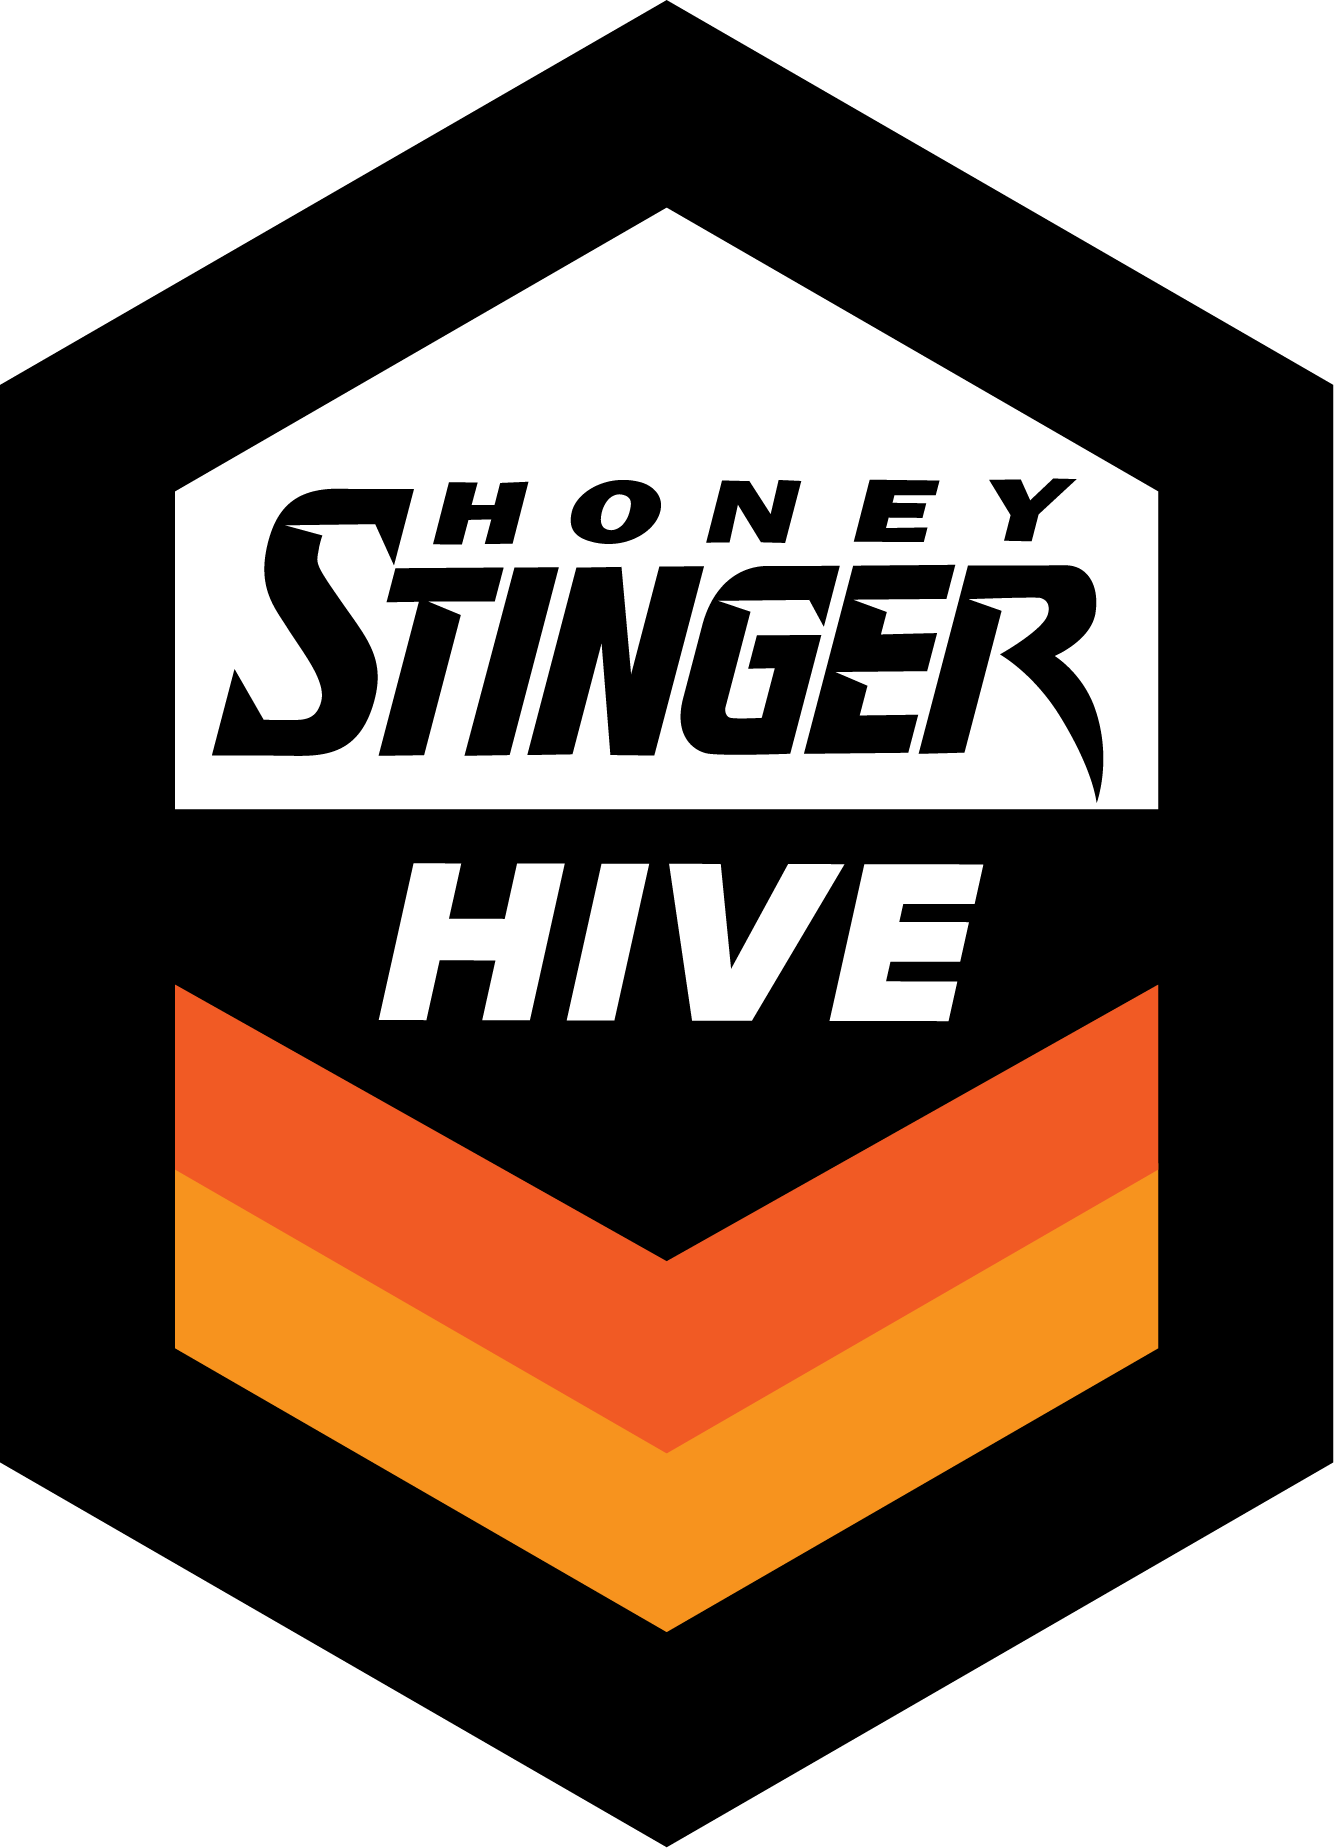 Come check us out Honey Stinger